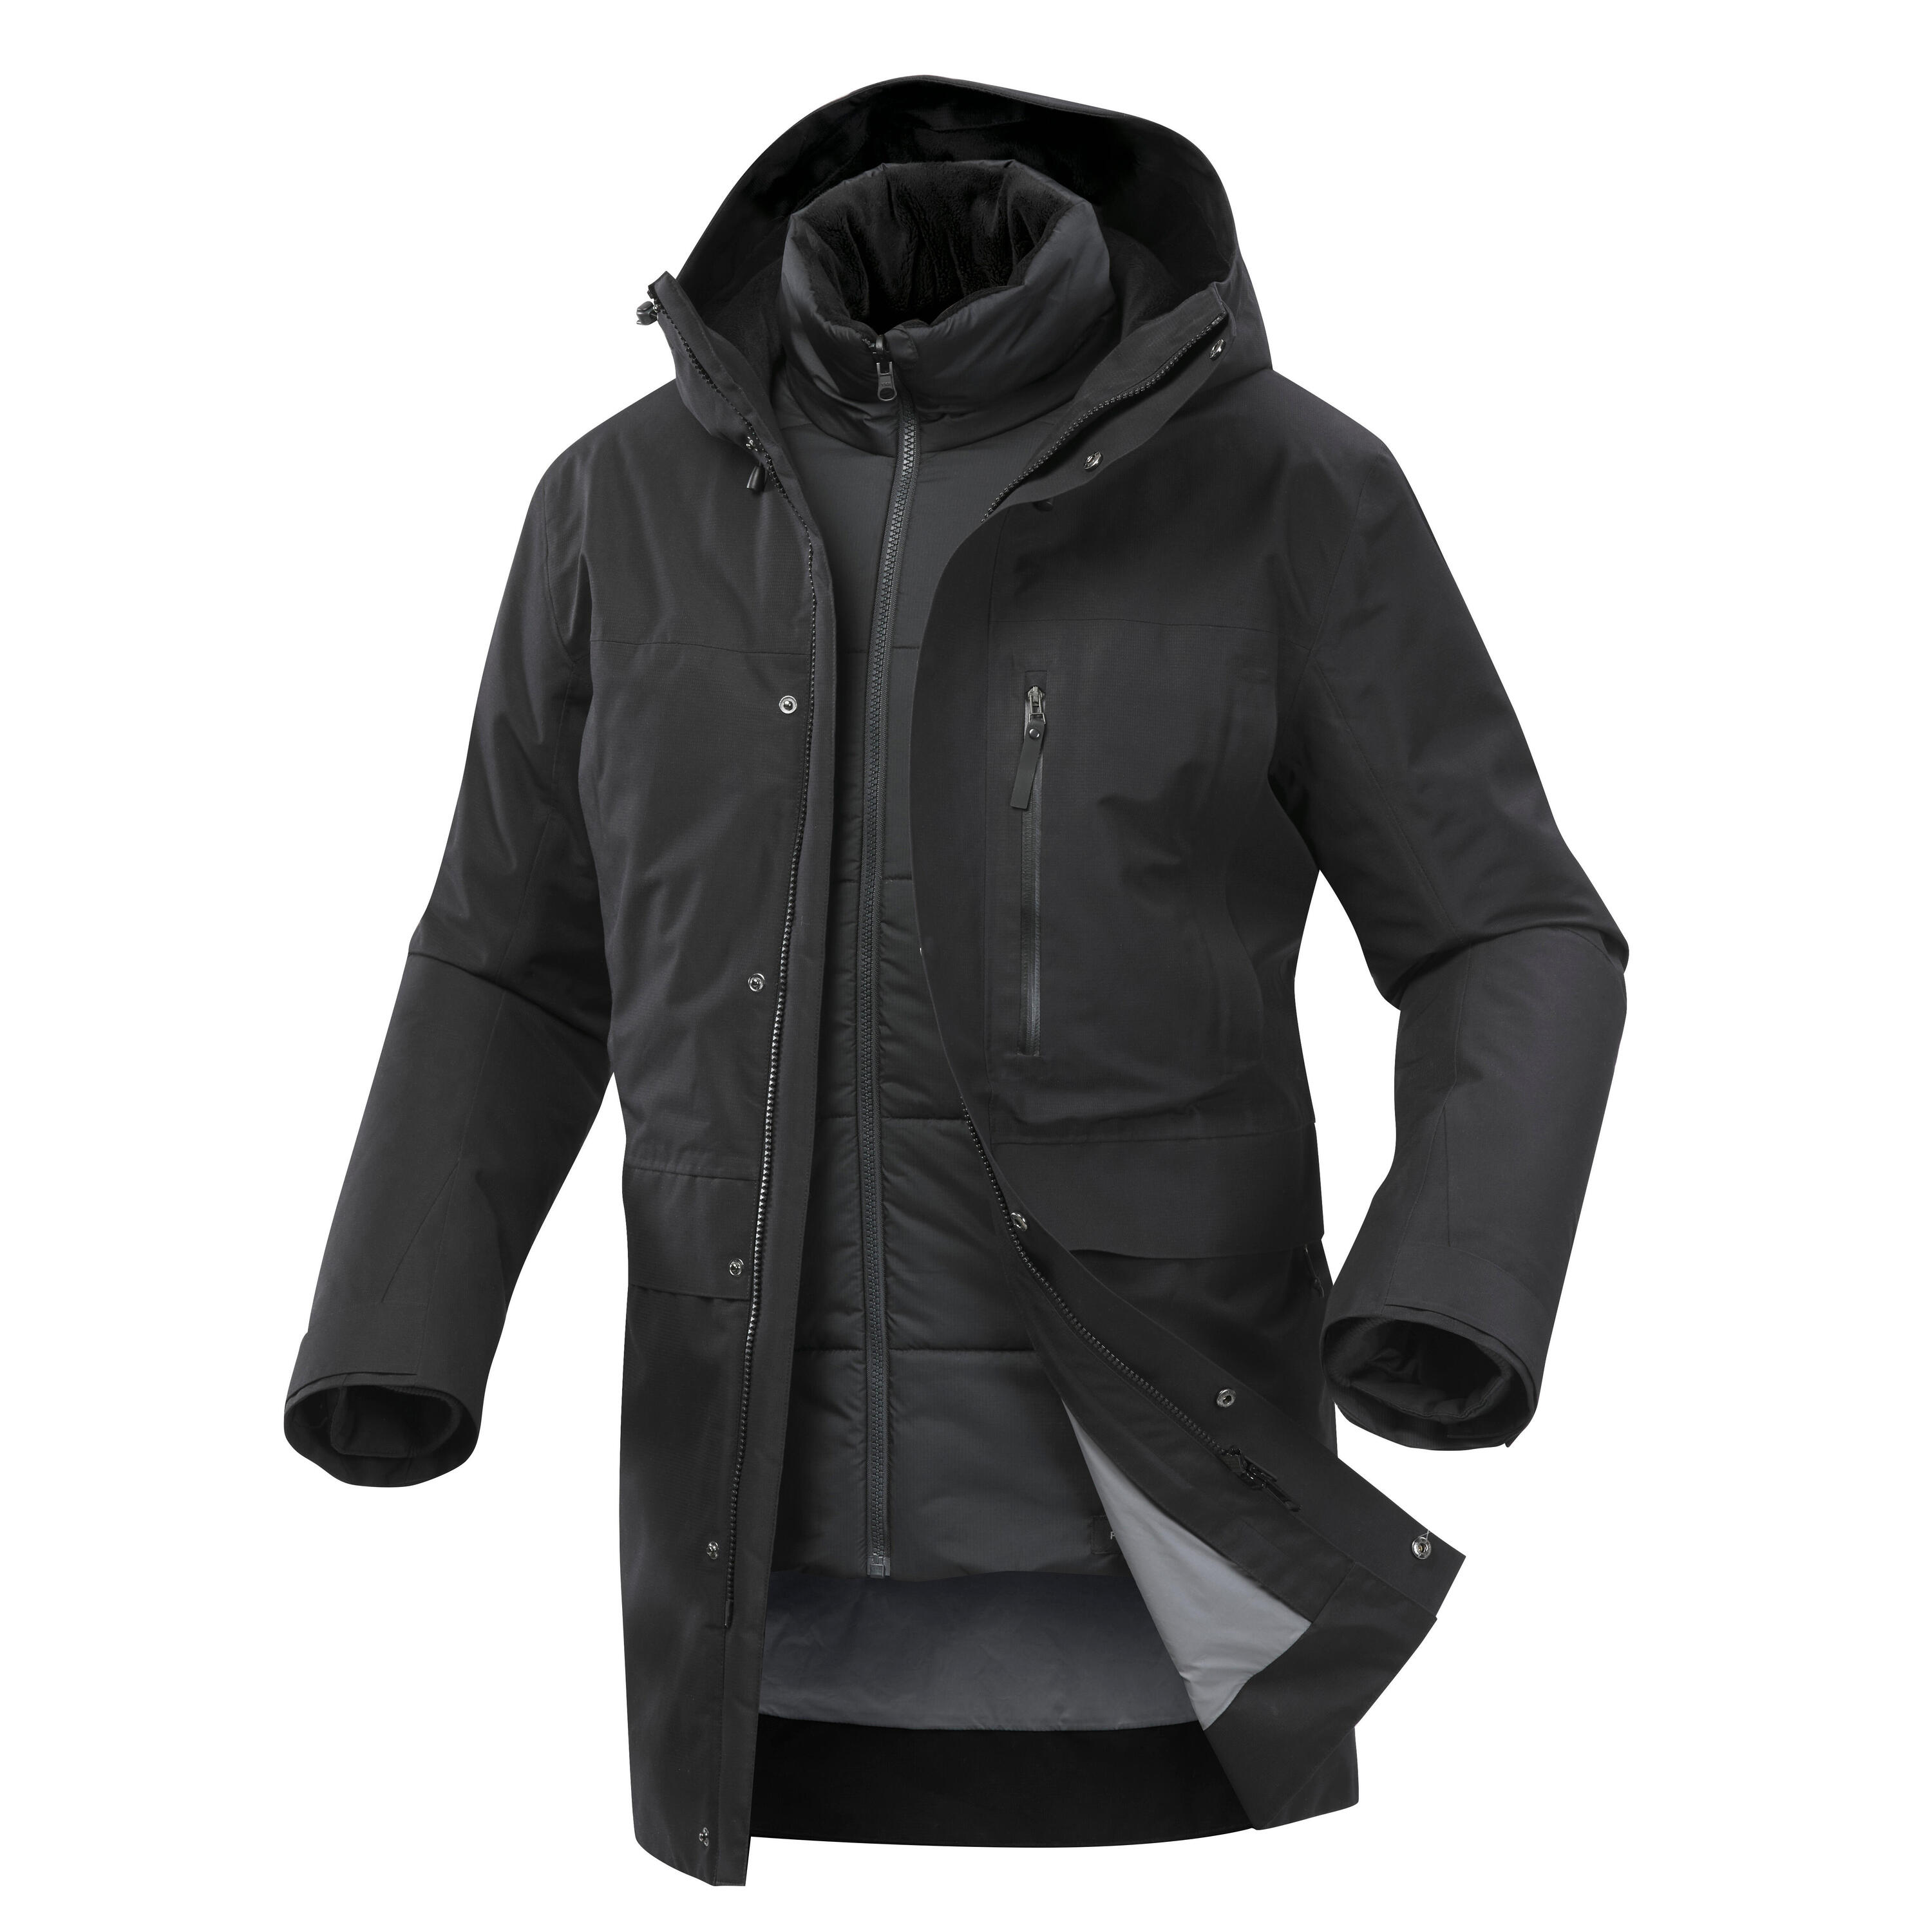 FORCLAZ Men's 3-in-1 Waterproof Travel Trekking Jacket Travel 900 Warm -15°C - black 